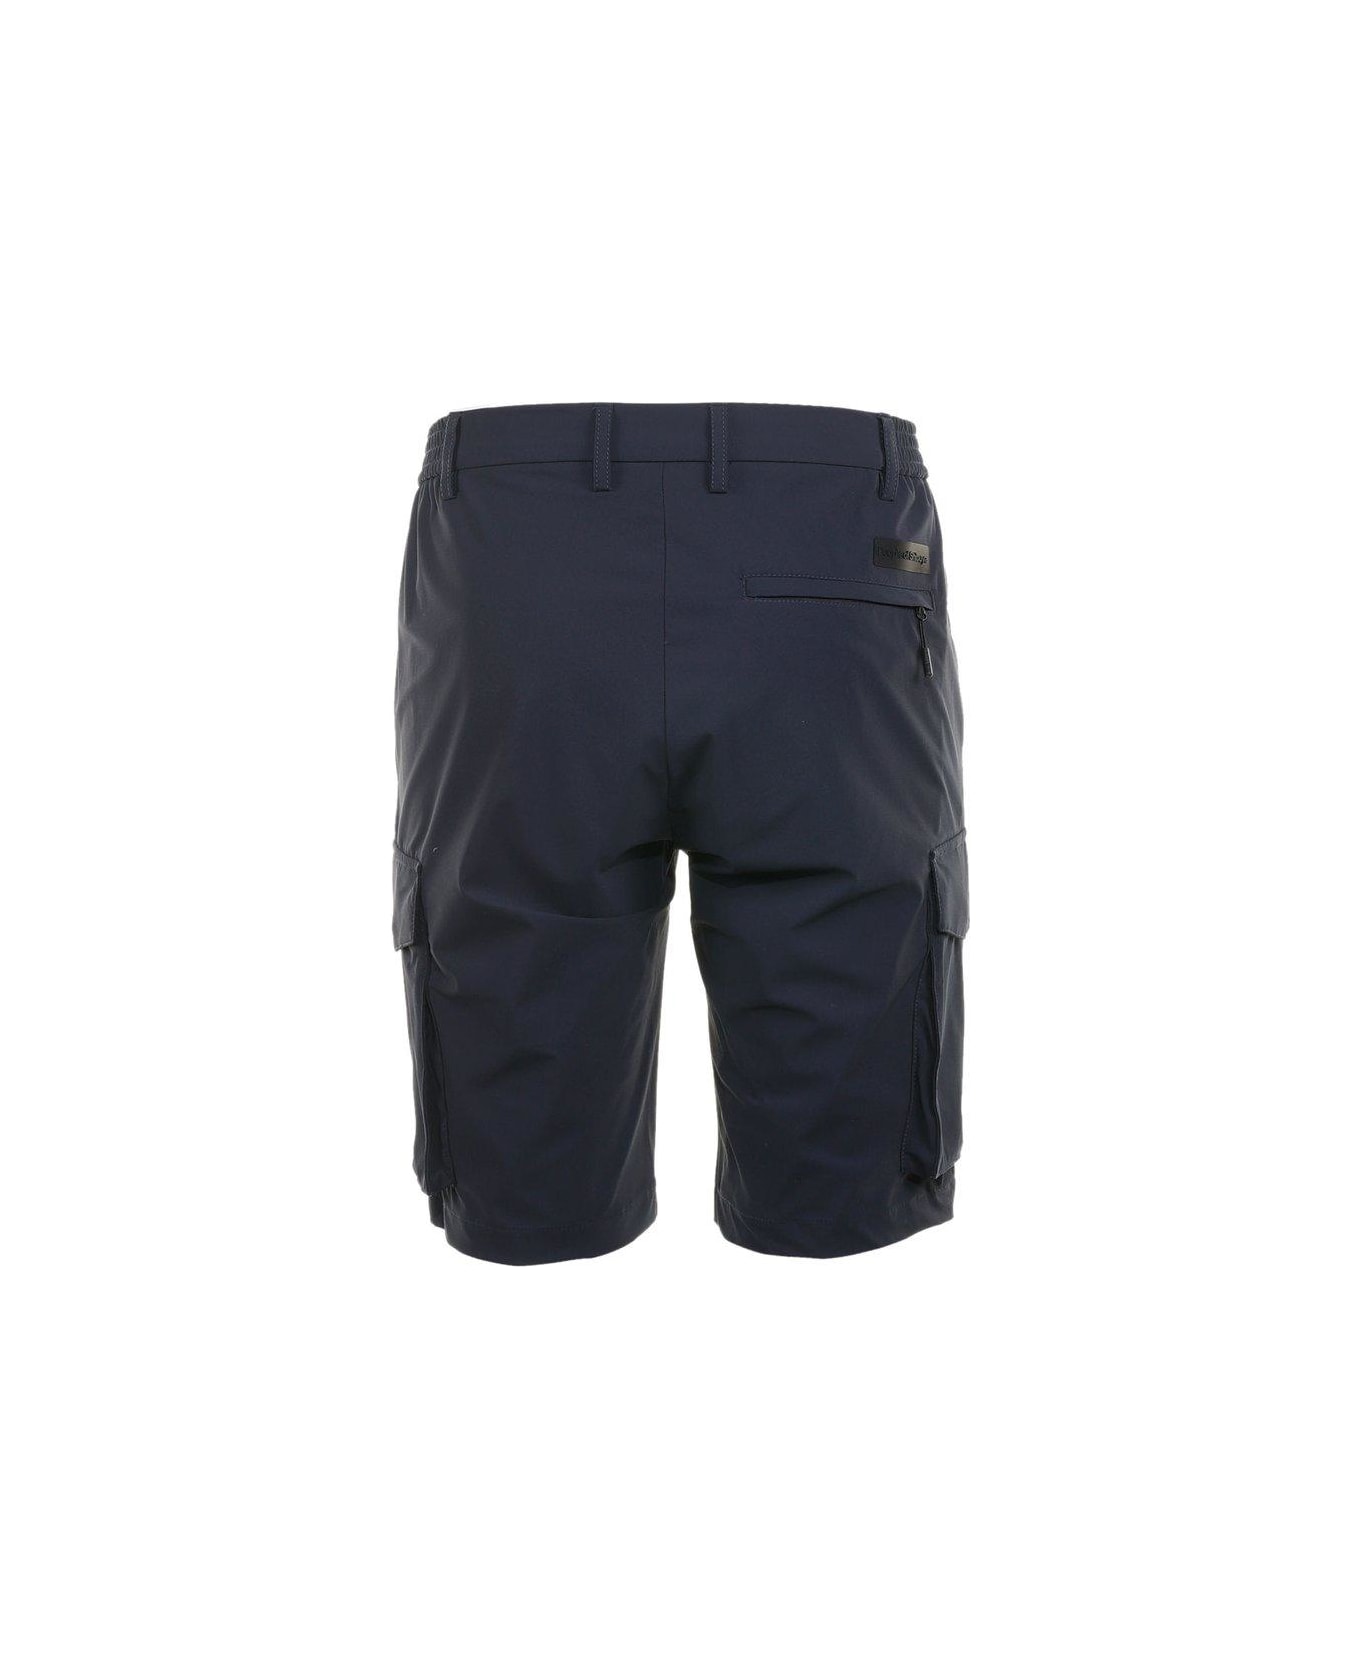 People Of Shibuya Pleat Detailed Bermuda Shorts - Navy Blue ショートパンツ